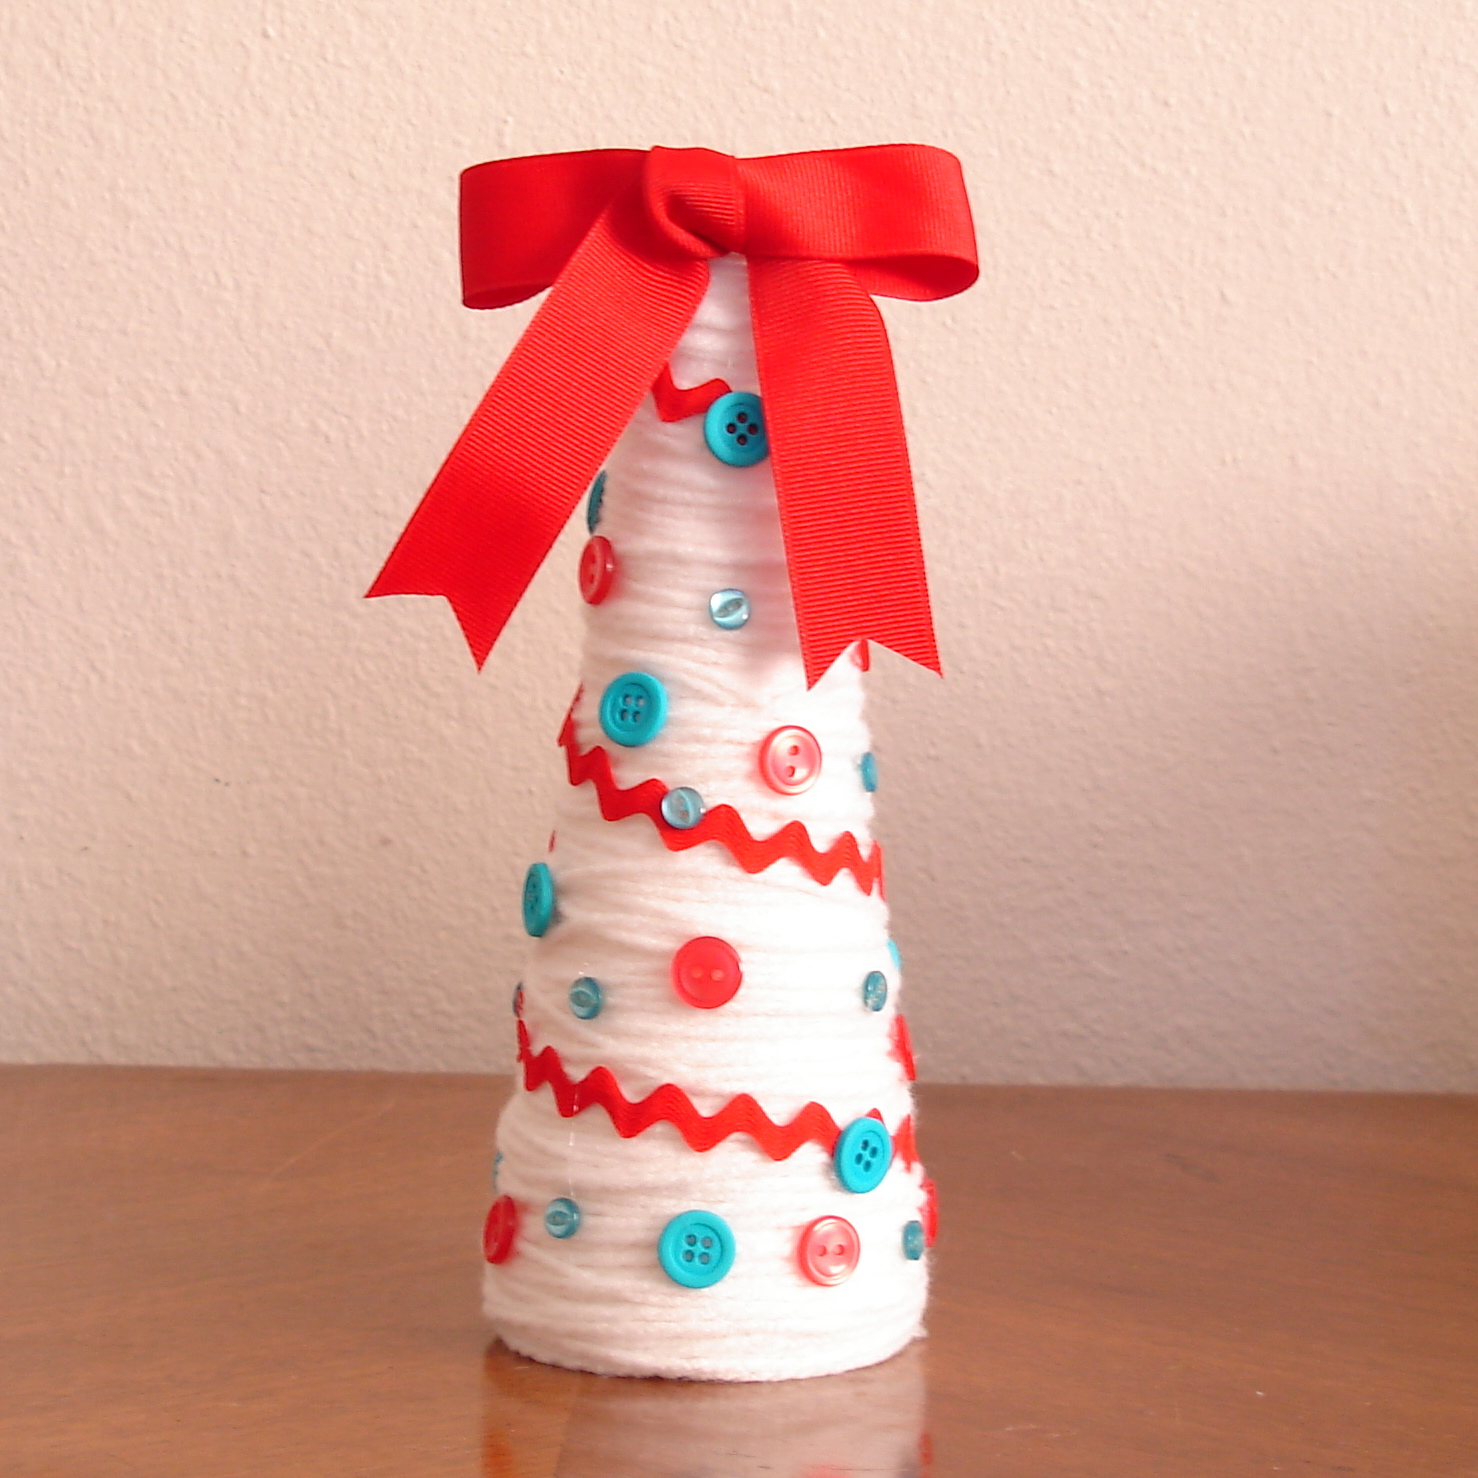 20 Mini Christmas Trees Simple Christmas Crafts Craft